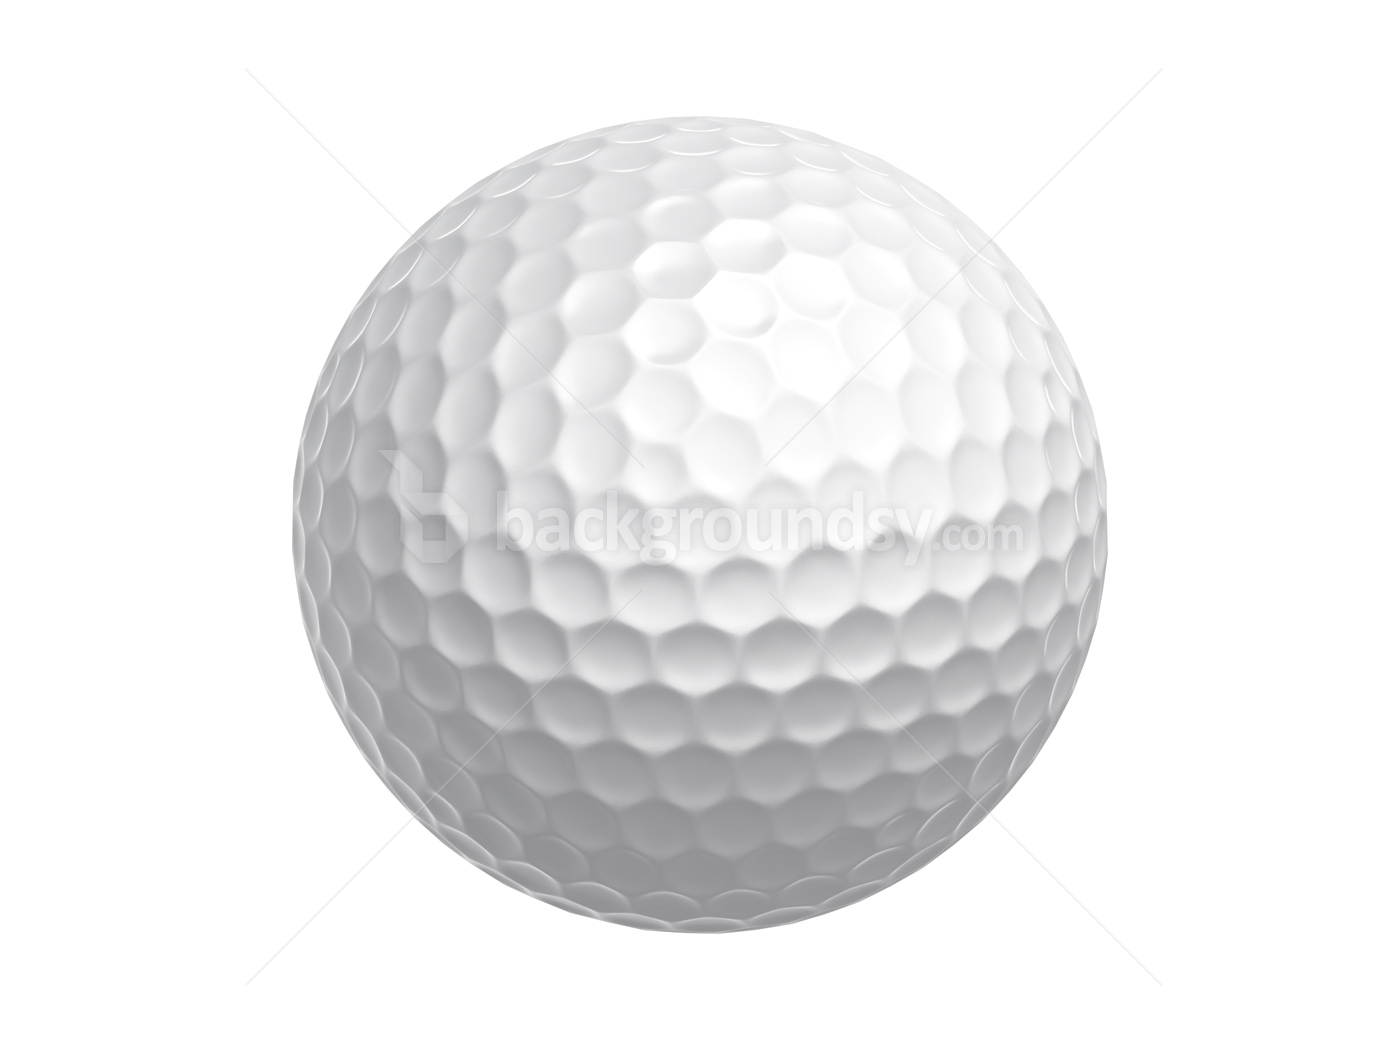 Free Golf Balls Cliparts, Download Free Golf Balls Cliparts png images ...